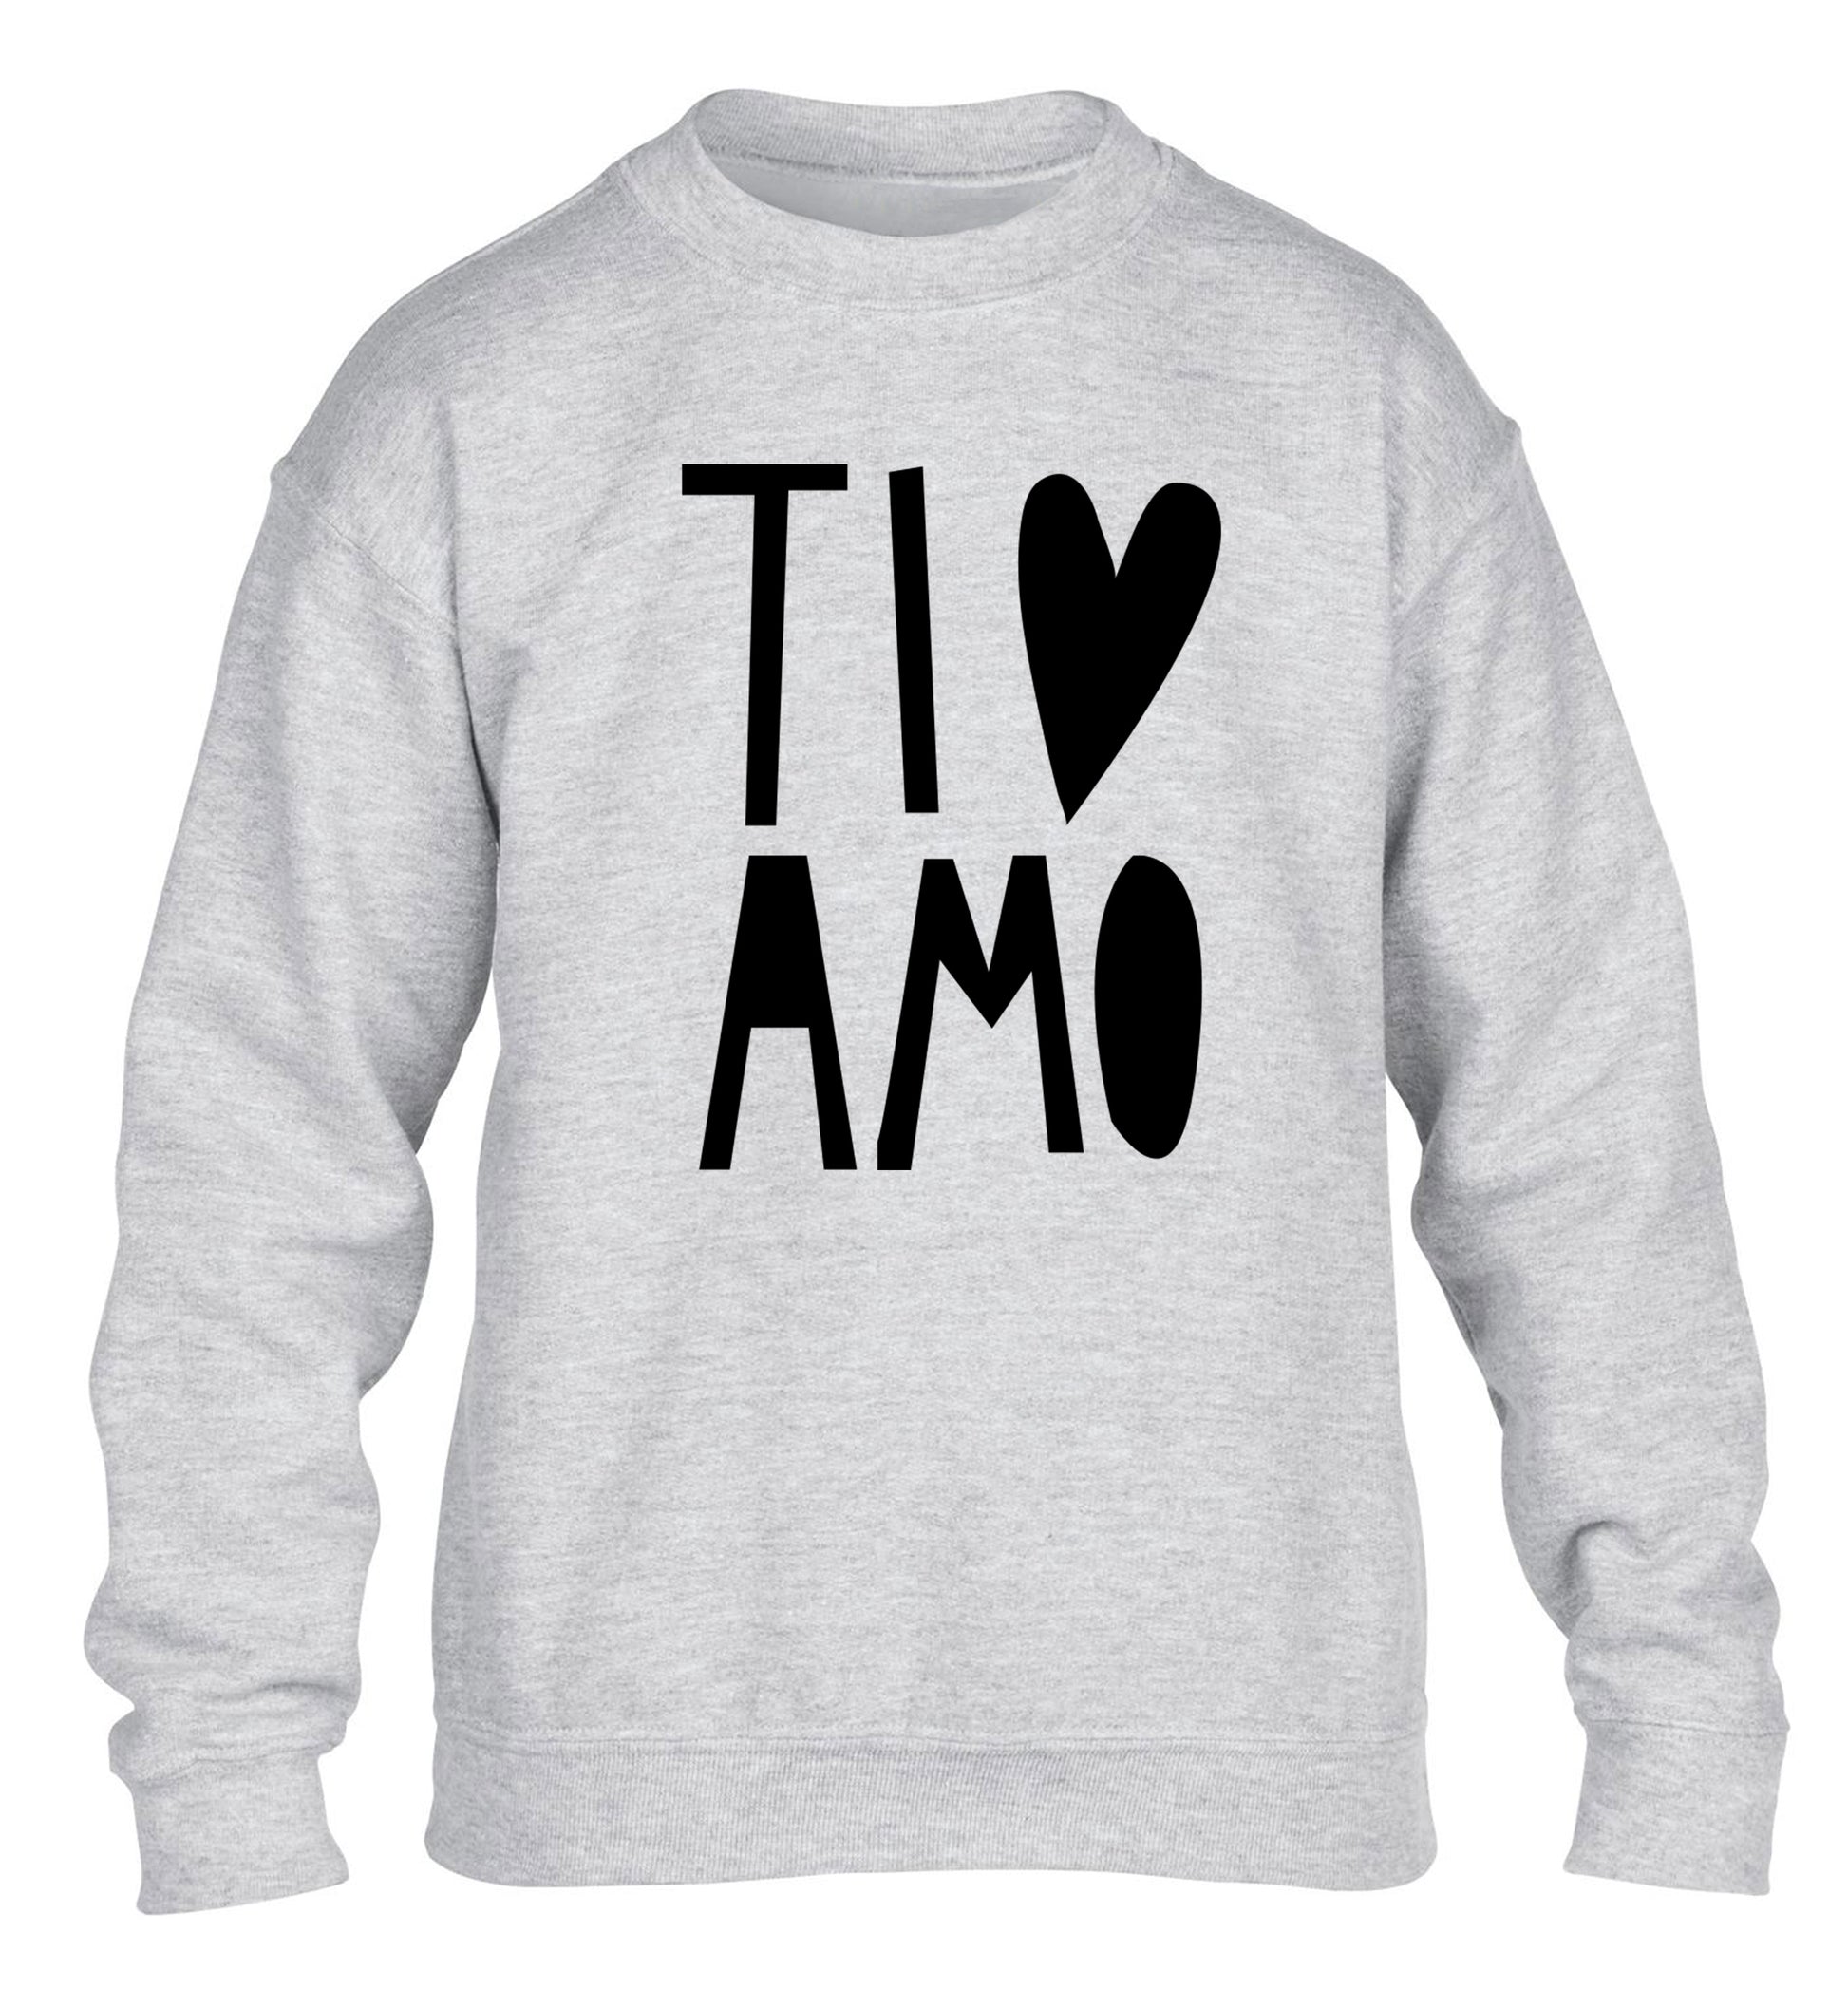 Ti amo - I love you children's grey sweater 12-13 Years